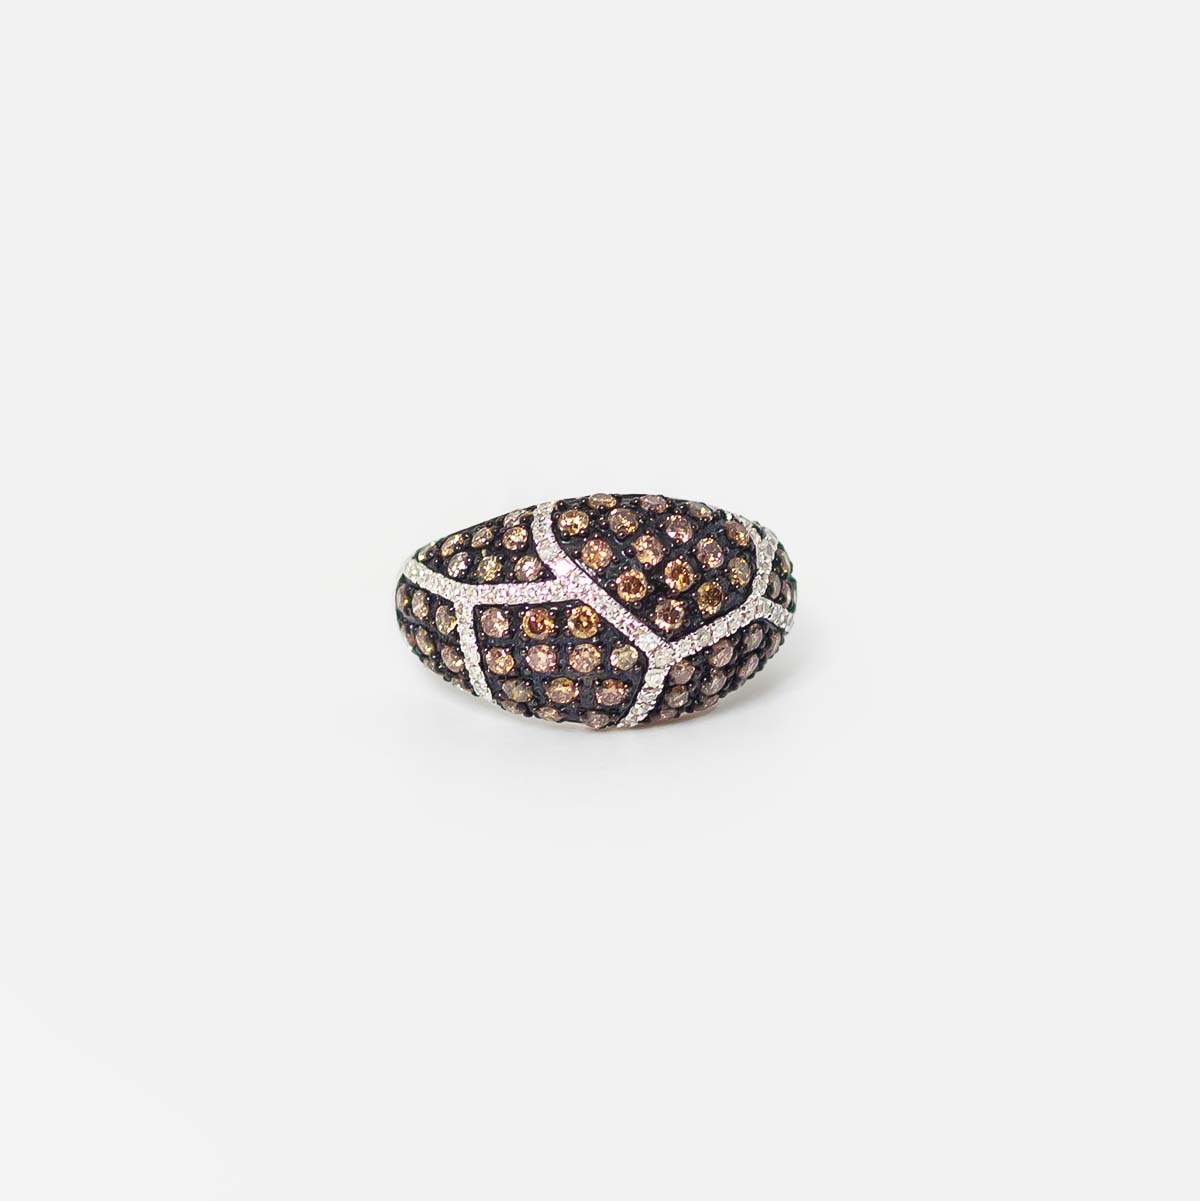 14KT Chocolate Diamond Ring R10532 - Royal Gems and Jewelry